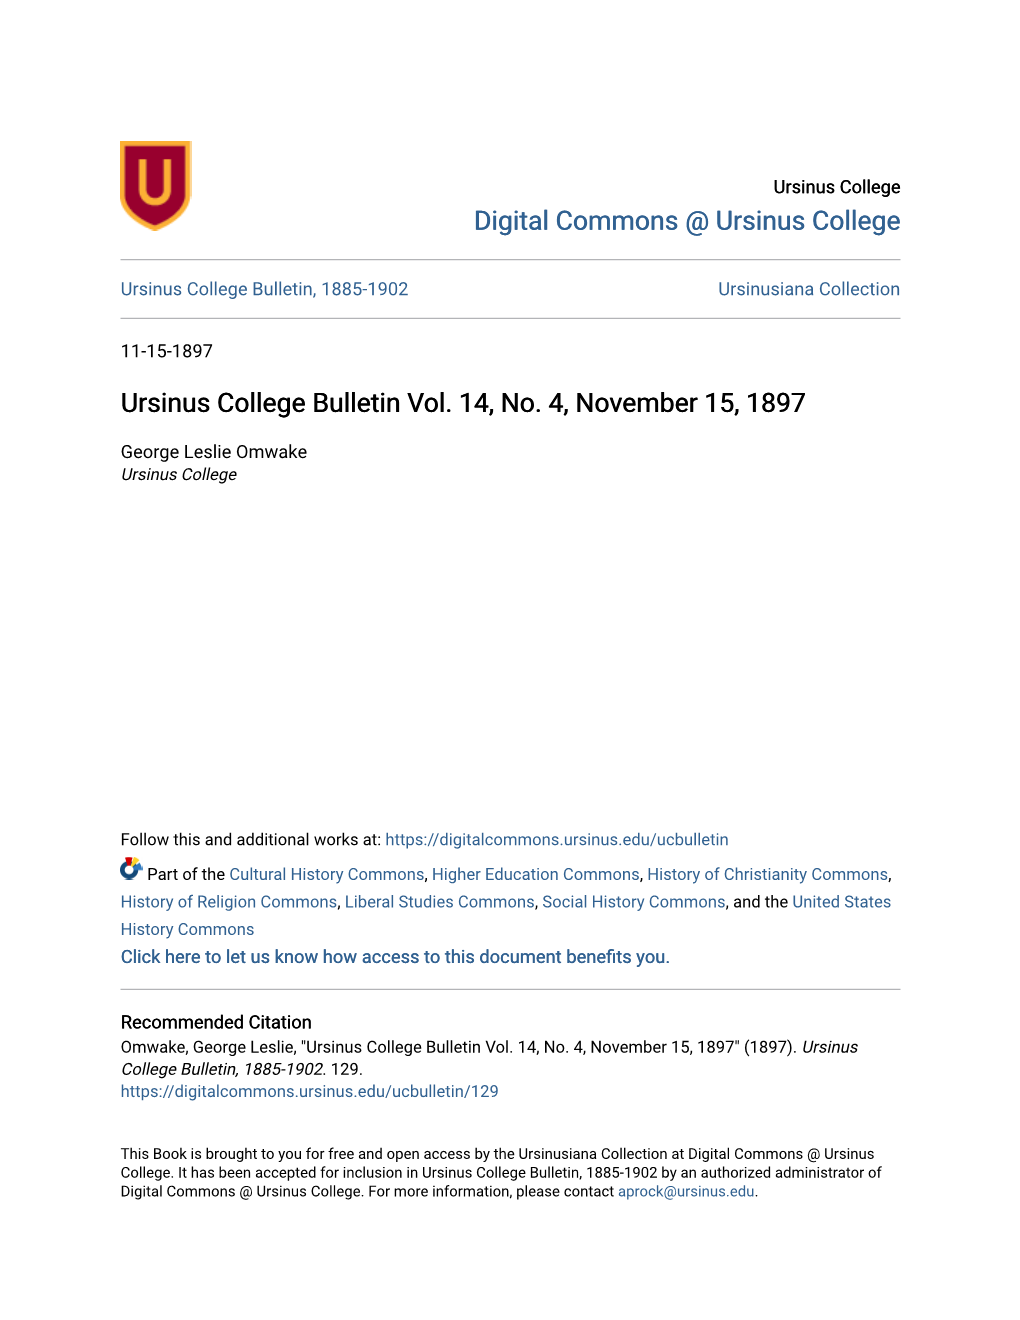 Ursinus College Bulletin Vol. 14, No. 4, November 15, 1897